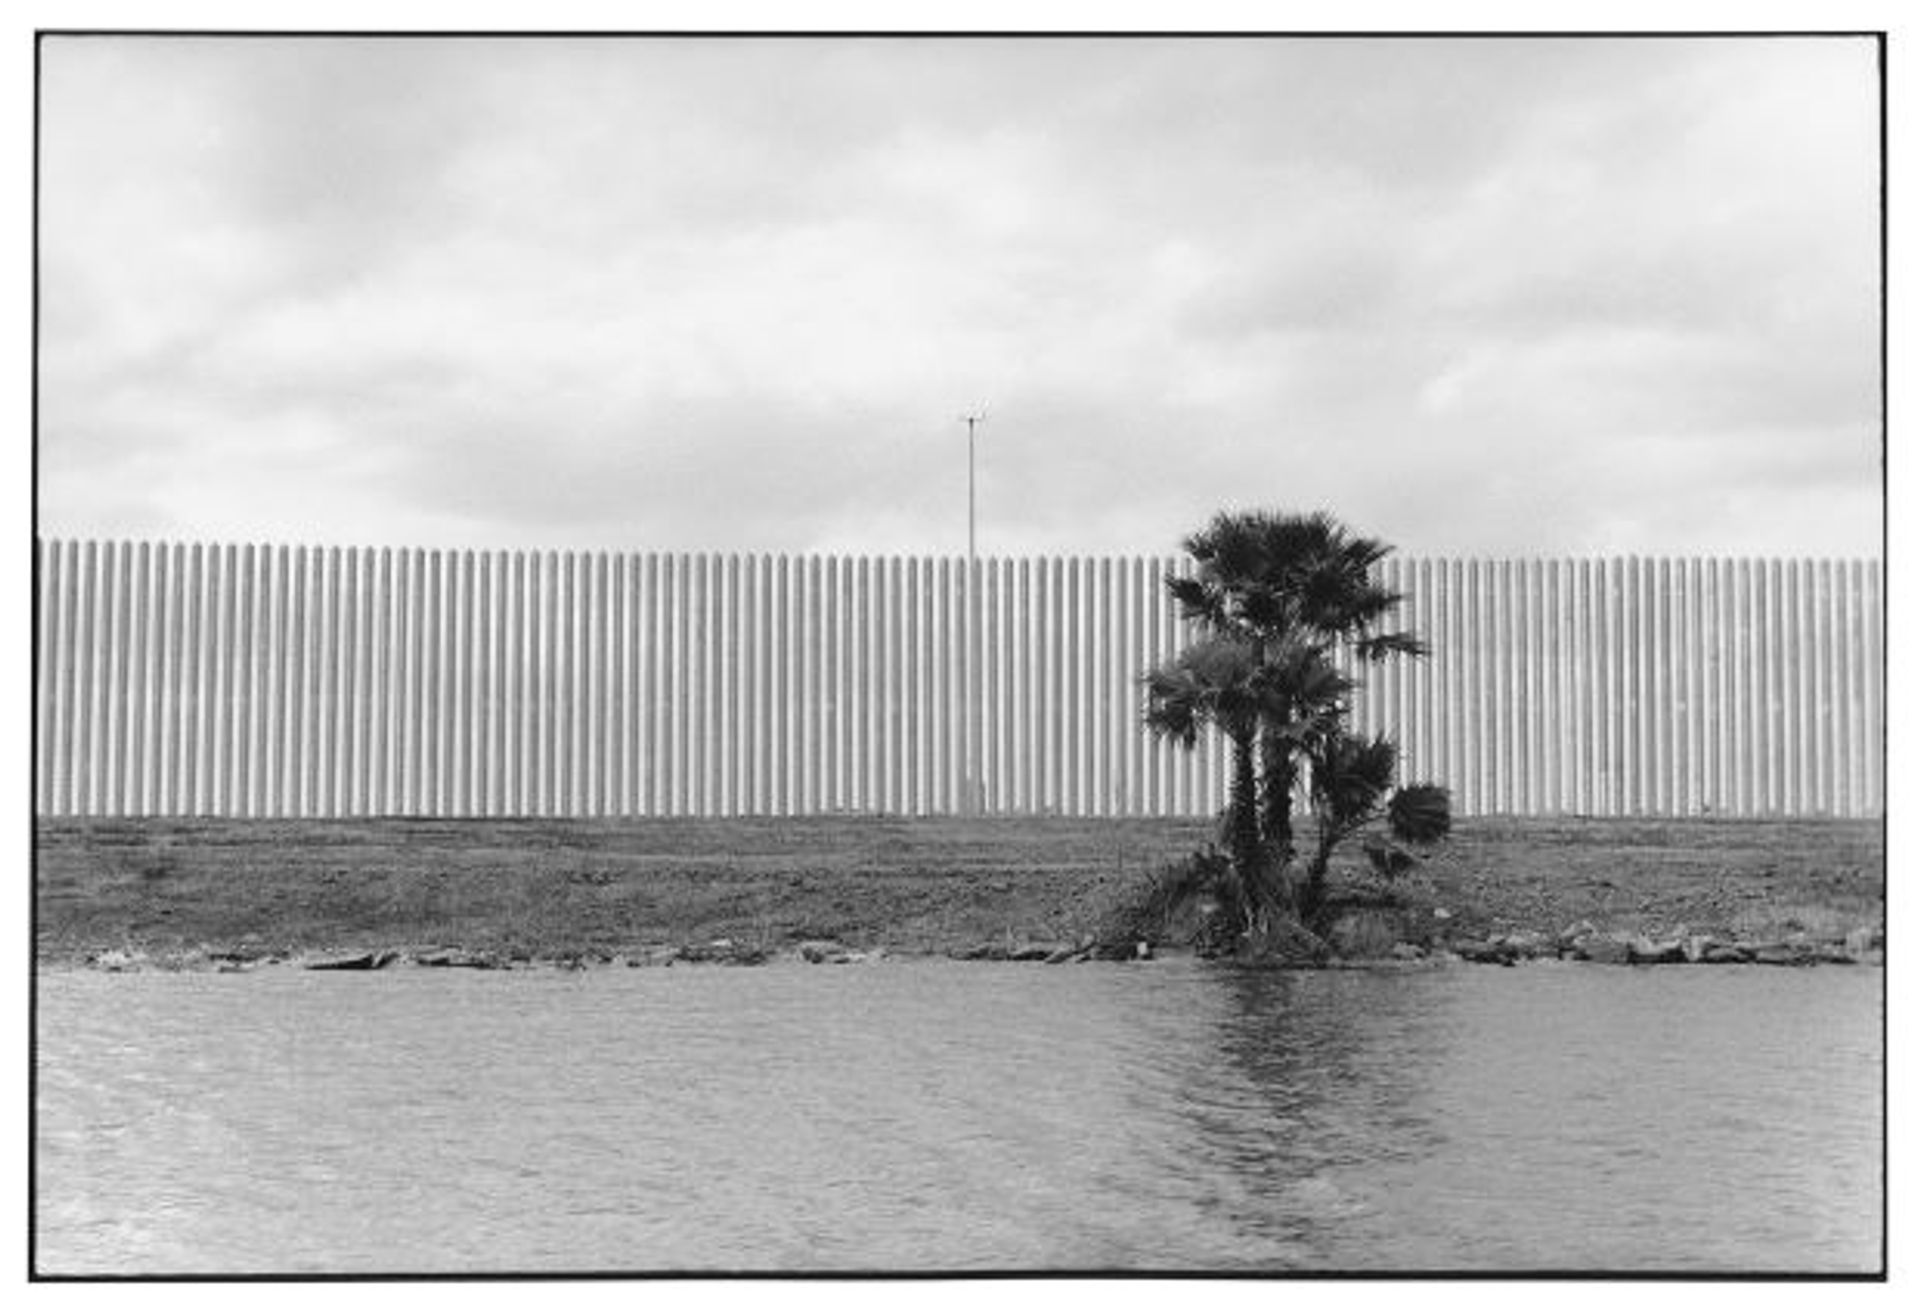 Zoe Leonard, Al río/To the River (série), 2016–2022, photographie. 

© Zoe Leonard. Courtesy de la Galerie Gisela Capitain, Cologne, et de Hauser & Wirth, NewYork